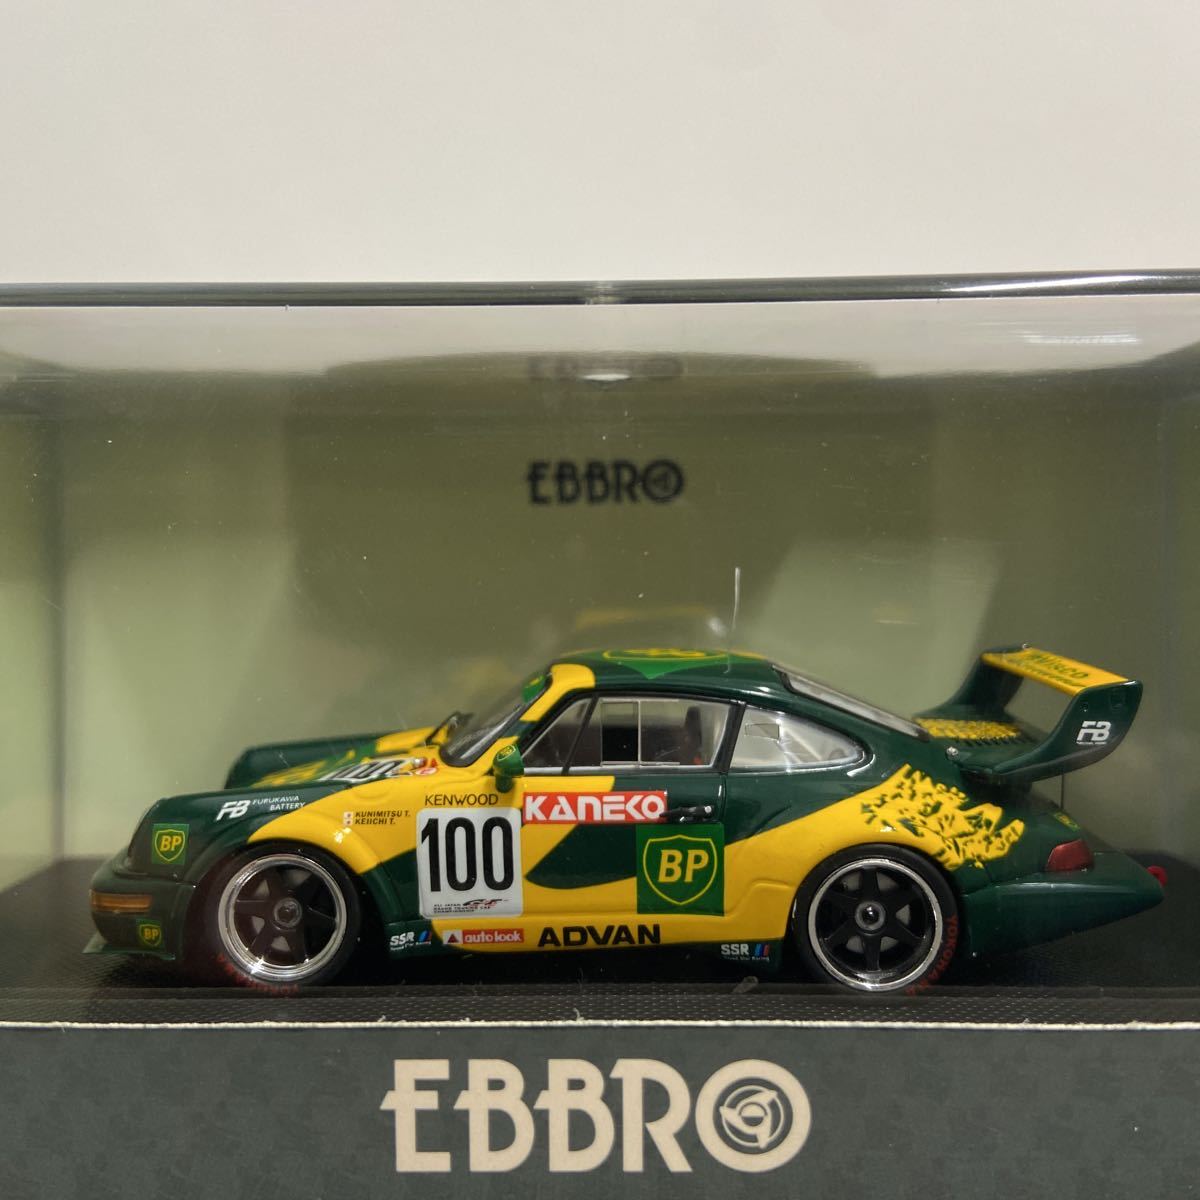 EBBRO 1/43 BP OIL Porsche Turbo GT1 JGTC 1995年 #100 高橋国光 土屋圭市 エブロ ポルシェ 911 964 ターボ 旧車 ミニカー モデルカー_画像4